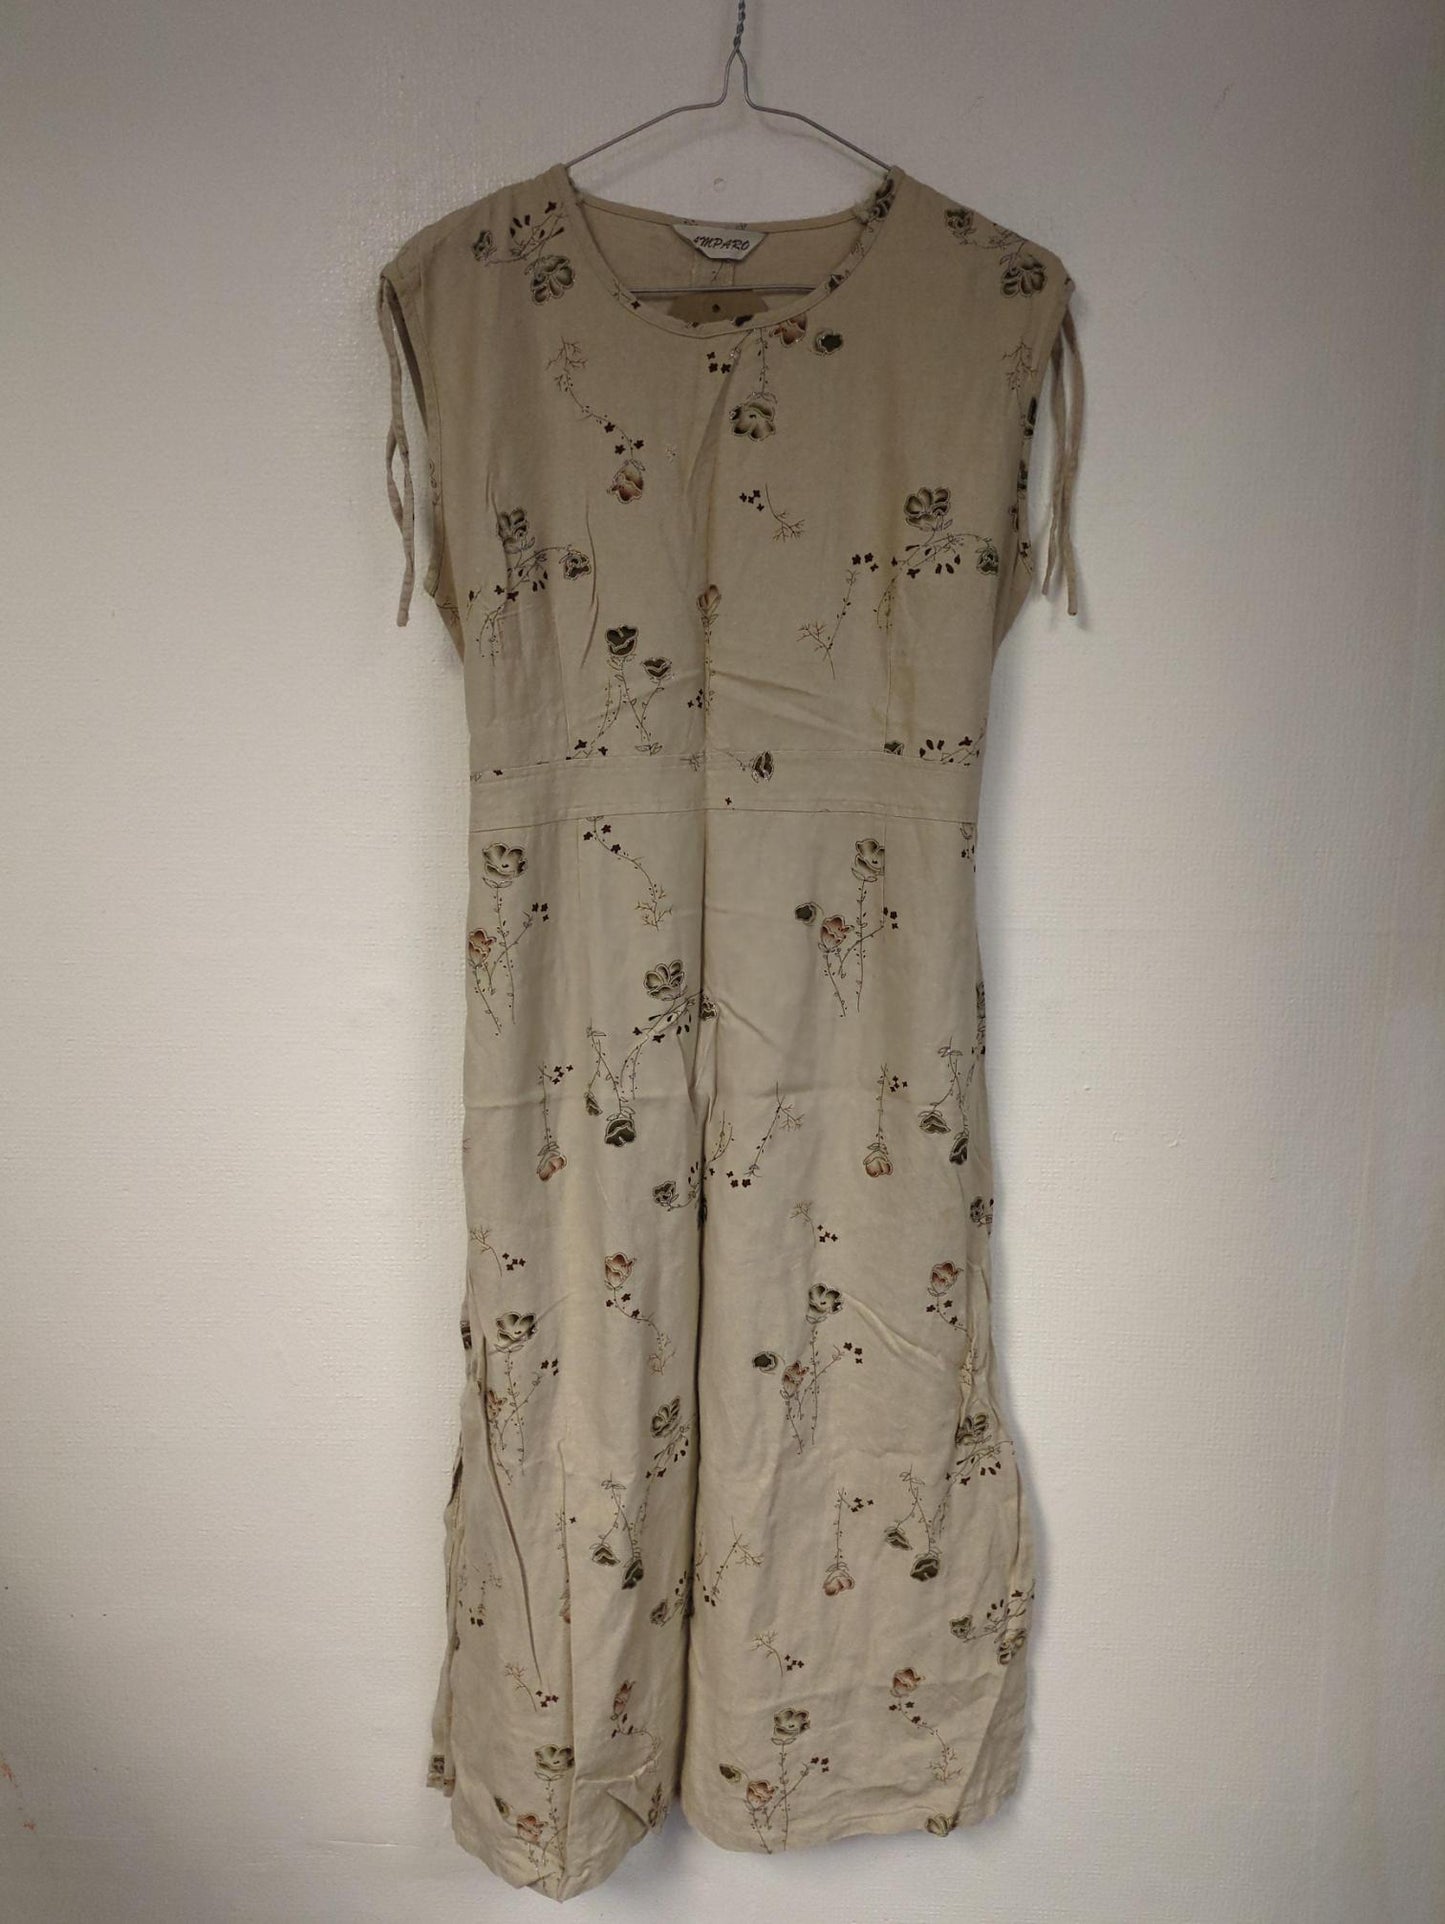 Vintage midi dress, size 10/12 - Damaged Item Sale